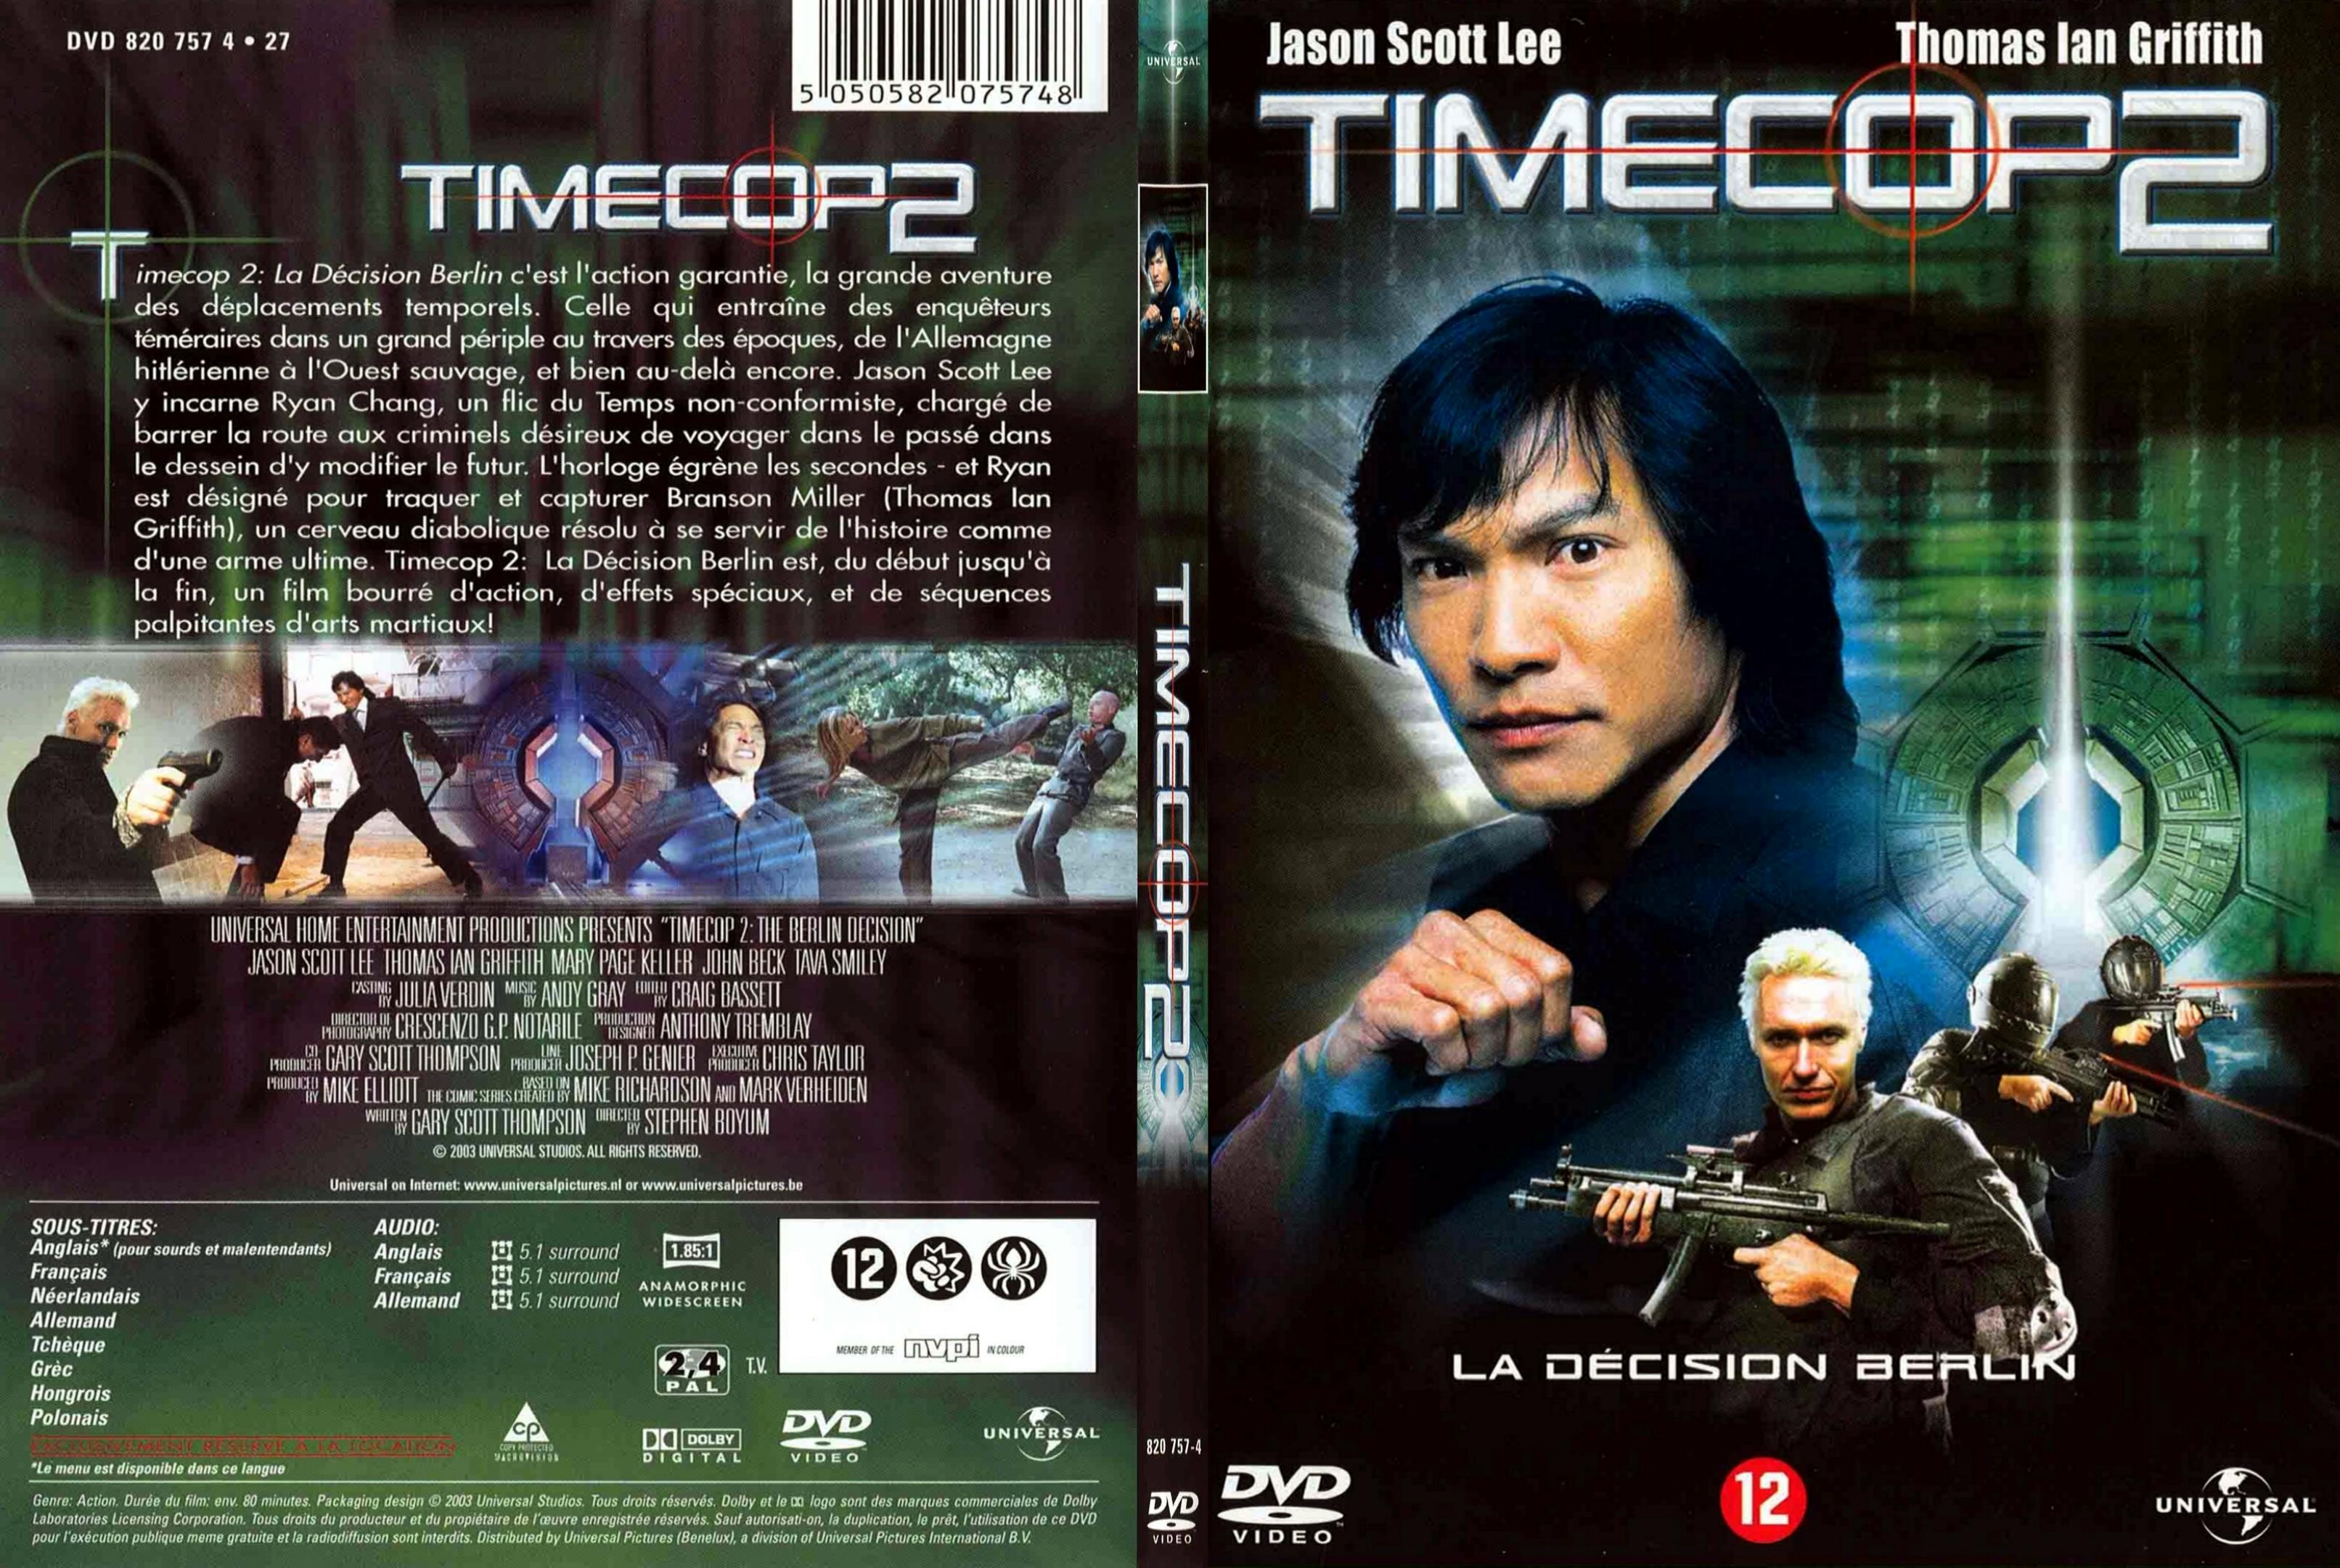 Jaquette DVD Timecop 2 - SLIM